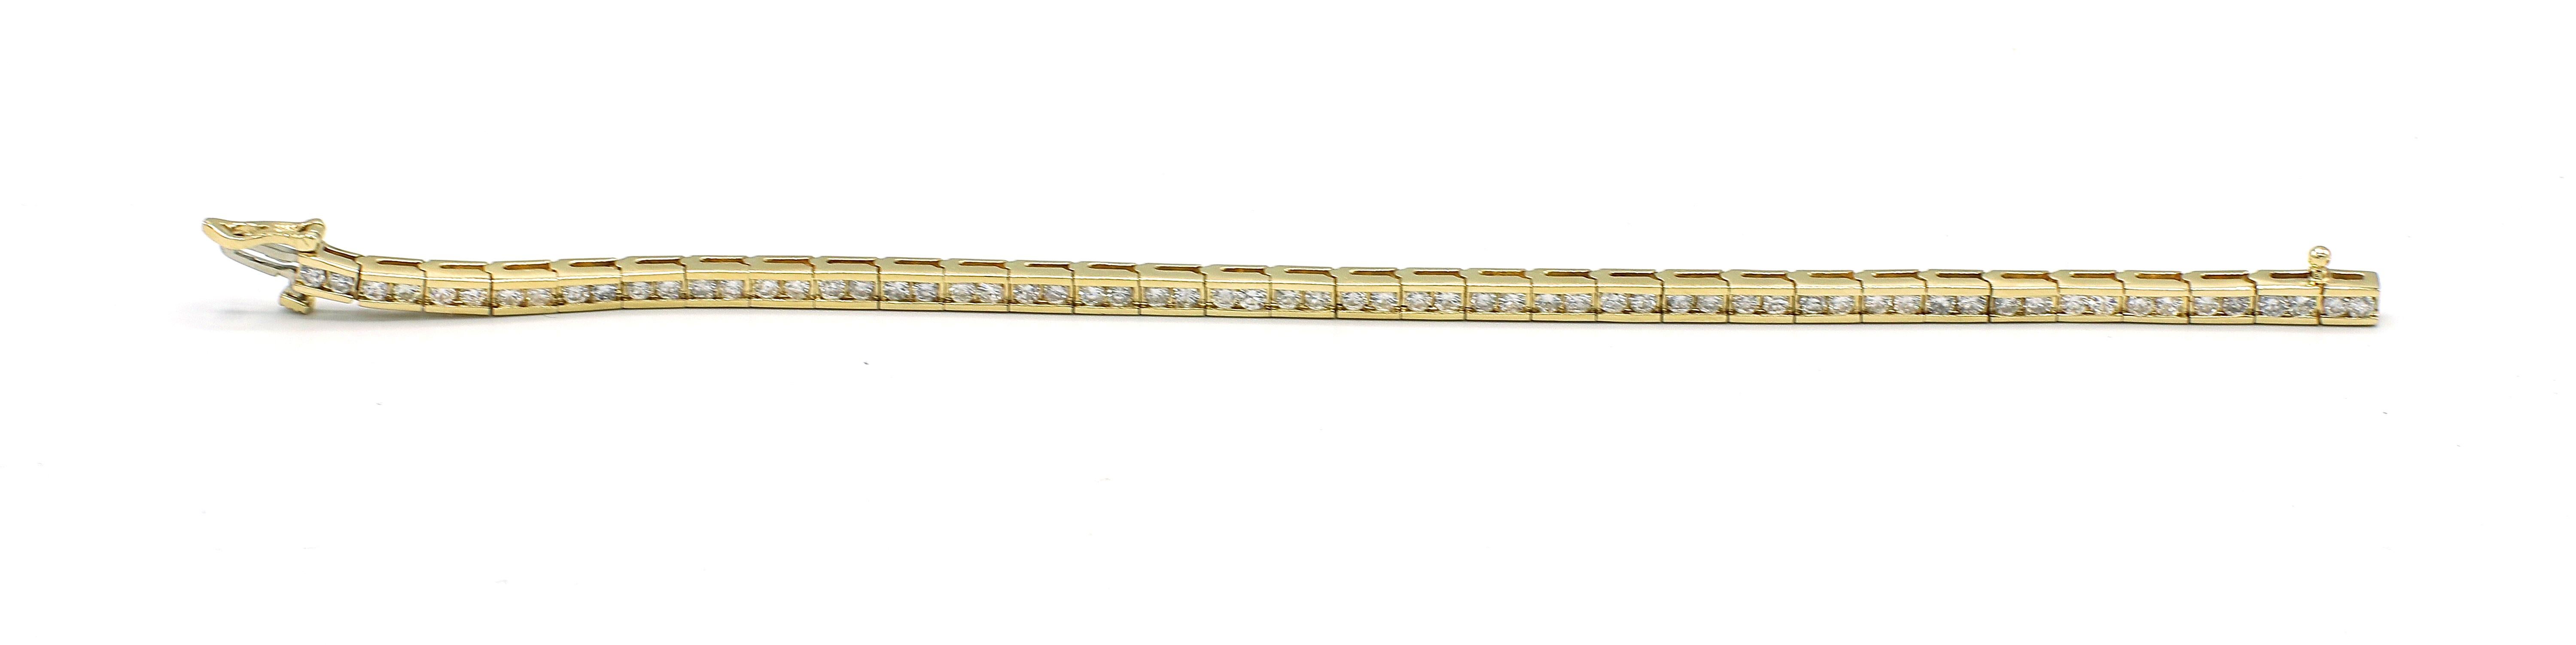 14K Yellow Gold 3 Carat Diamond Tennis Bracelet 
Metal: 14k yellow gold
Weight: 15.3 grams
Diamonds: Approx. 3 CTW G-H SI
Length: 7 inches